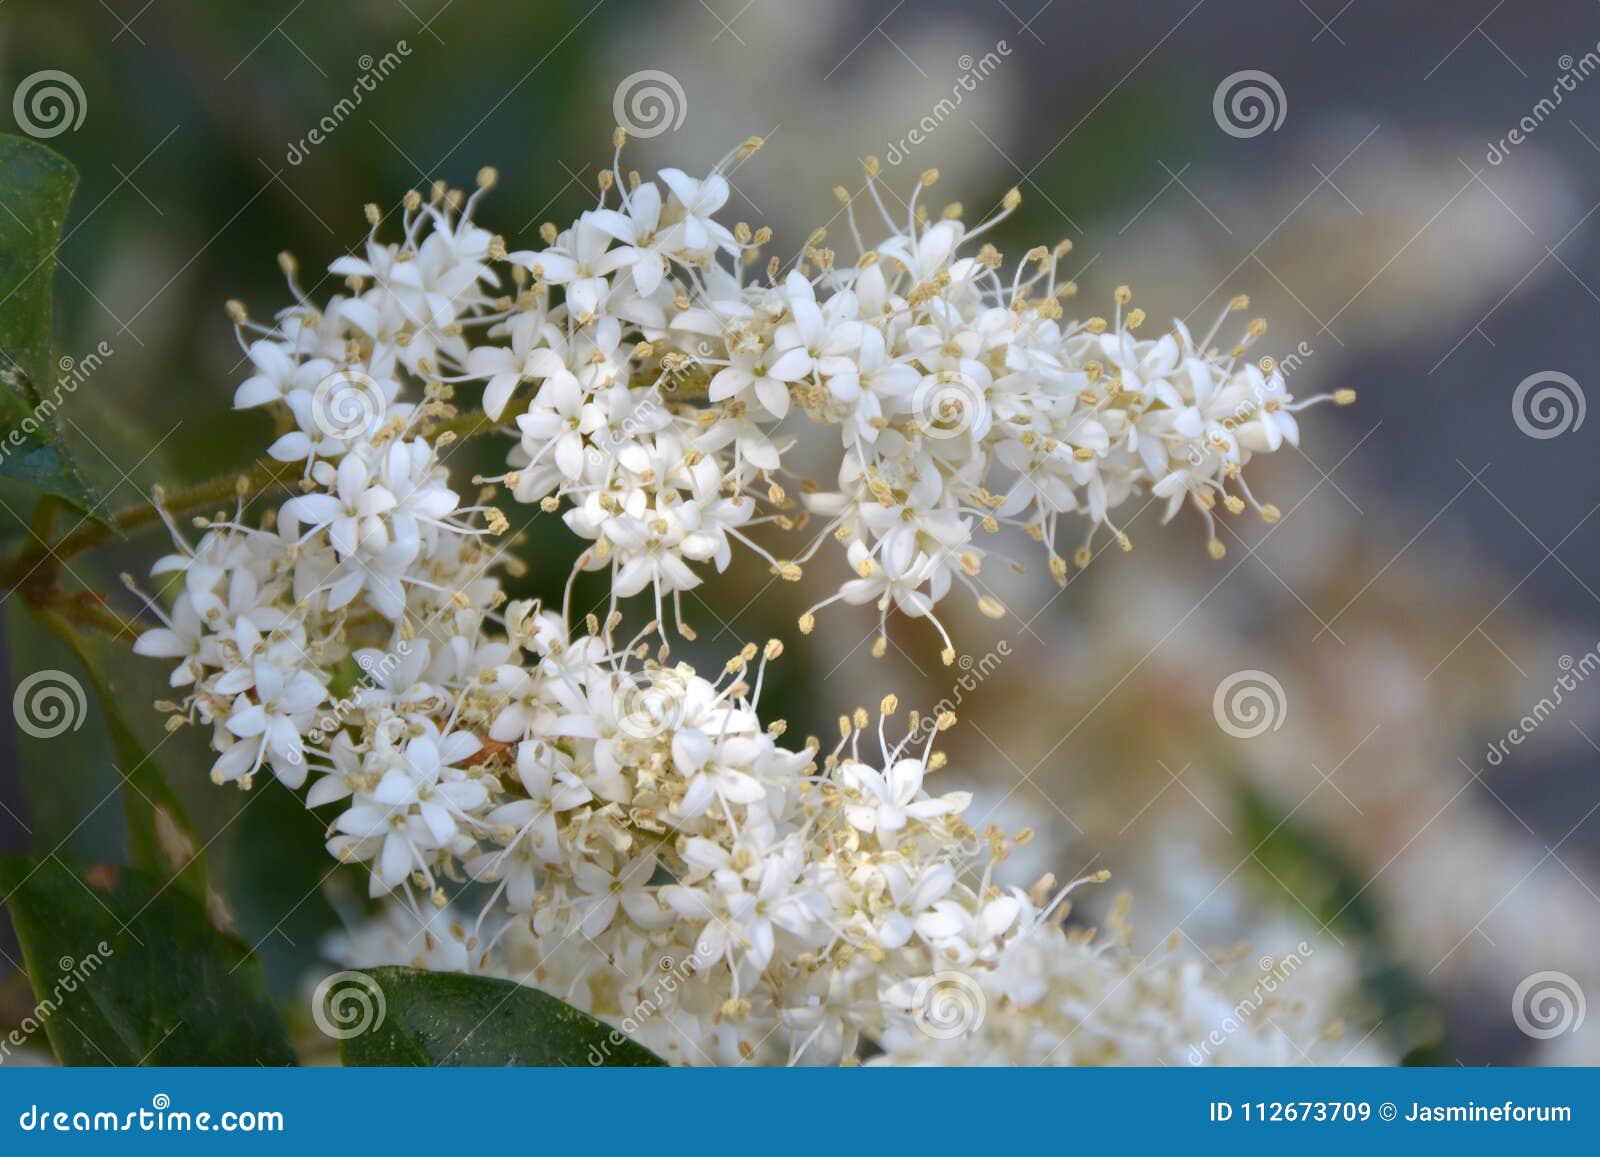 ligustrum sinense flowers closeup